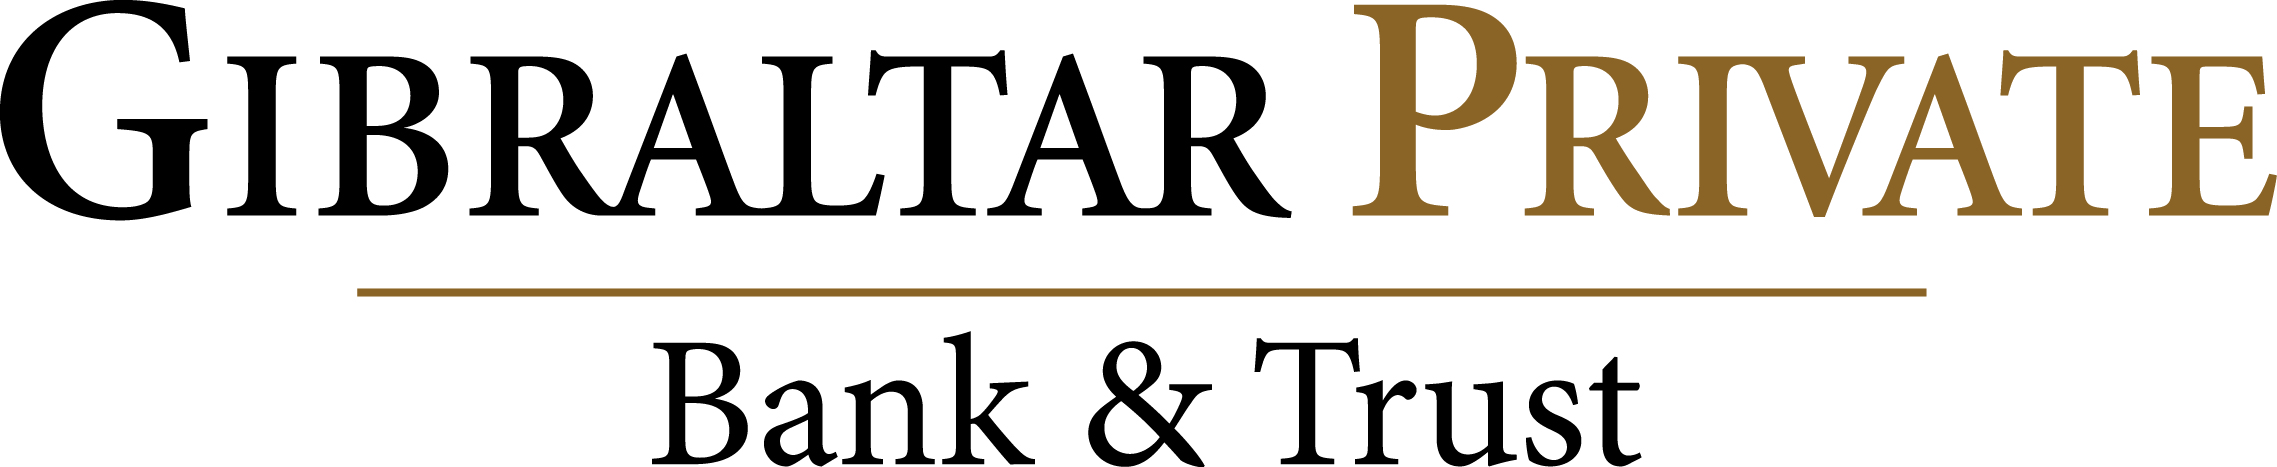 Gibraltar Private Bank & Trust (high-res logo)